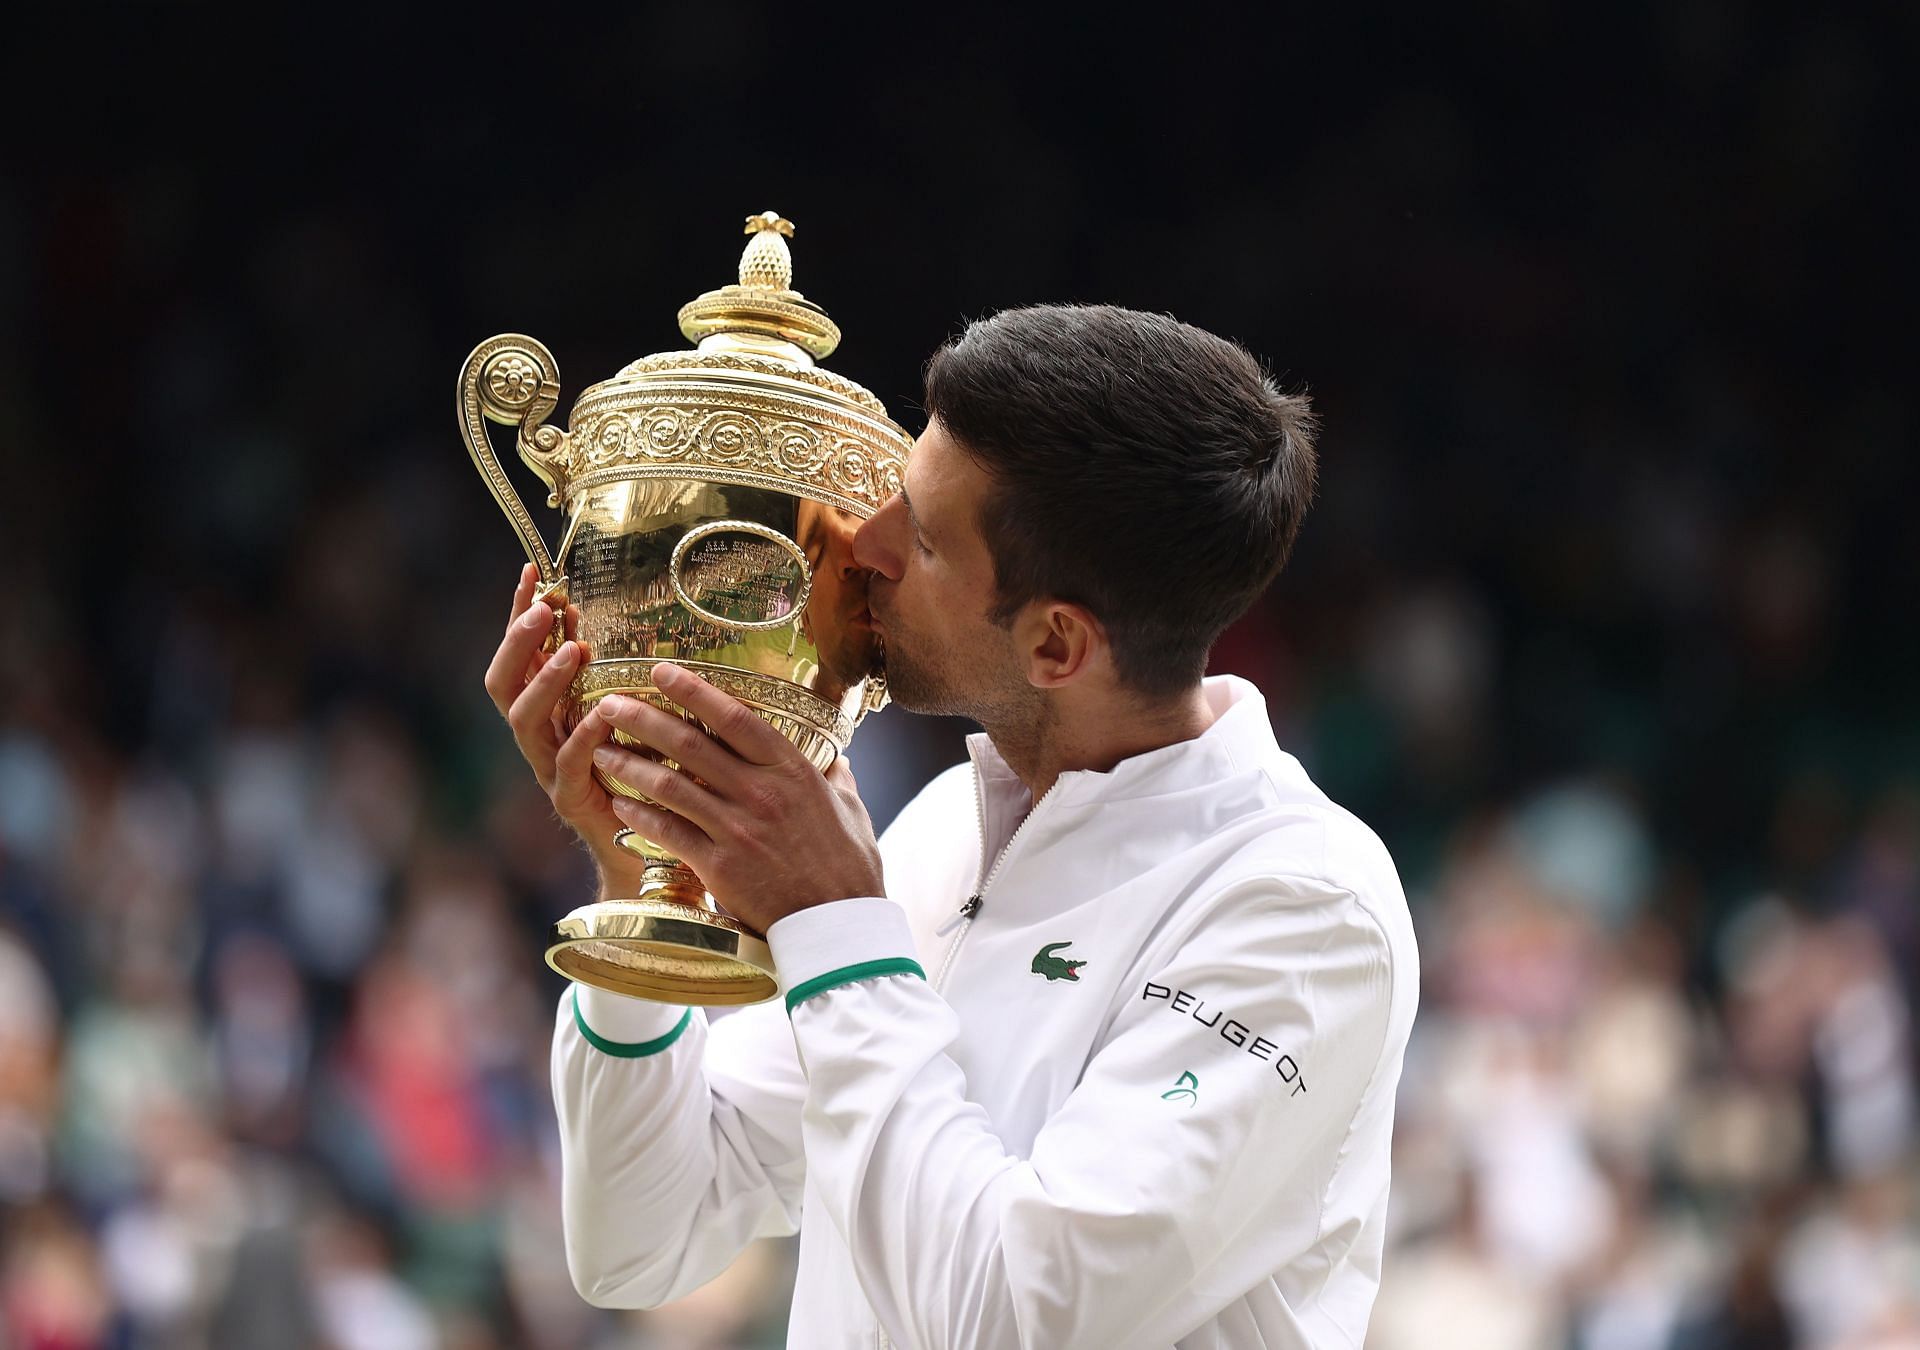 Novak Djokovic lifts the Wibmledon trophy